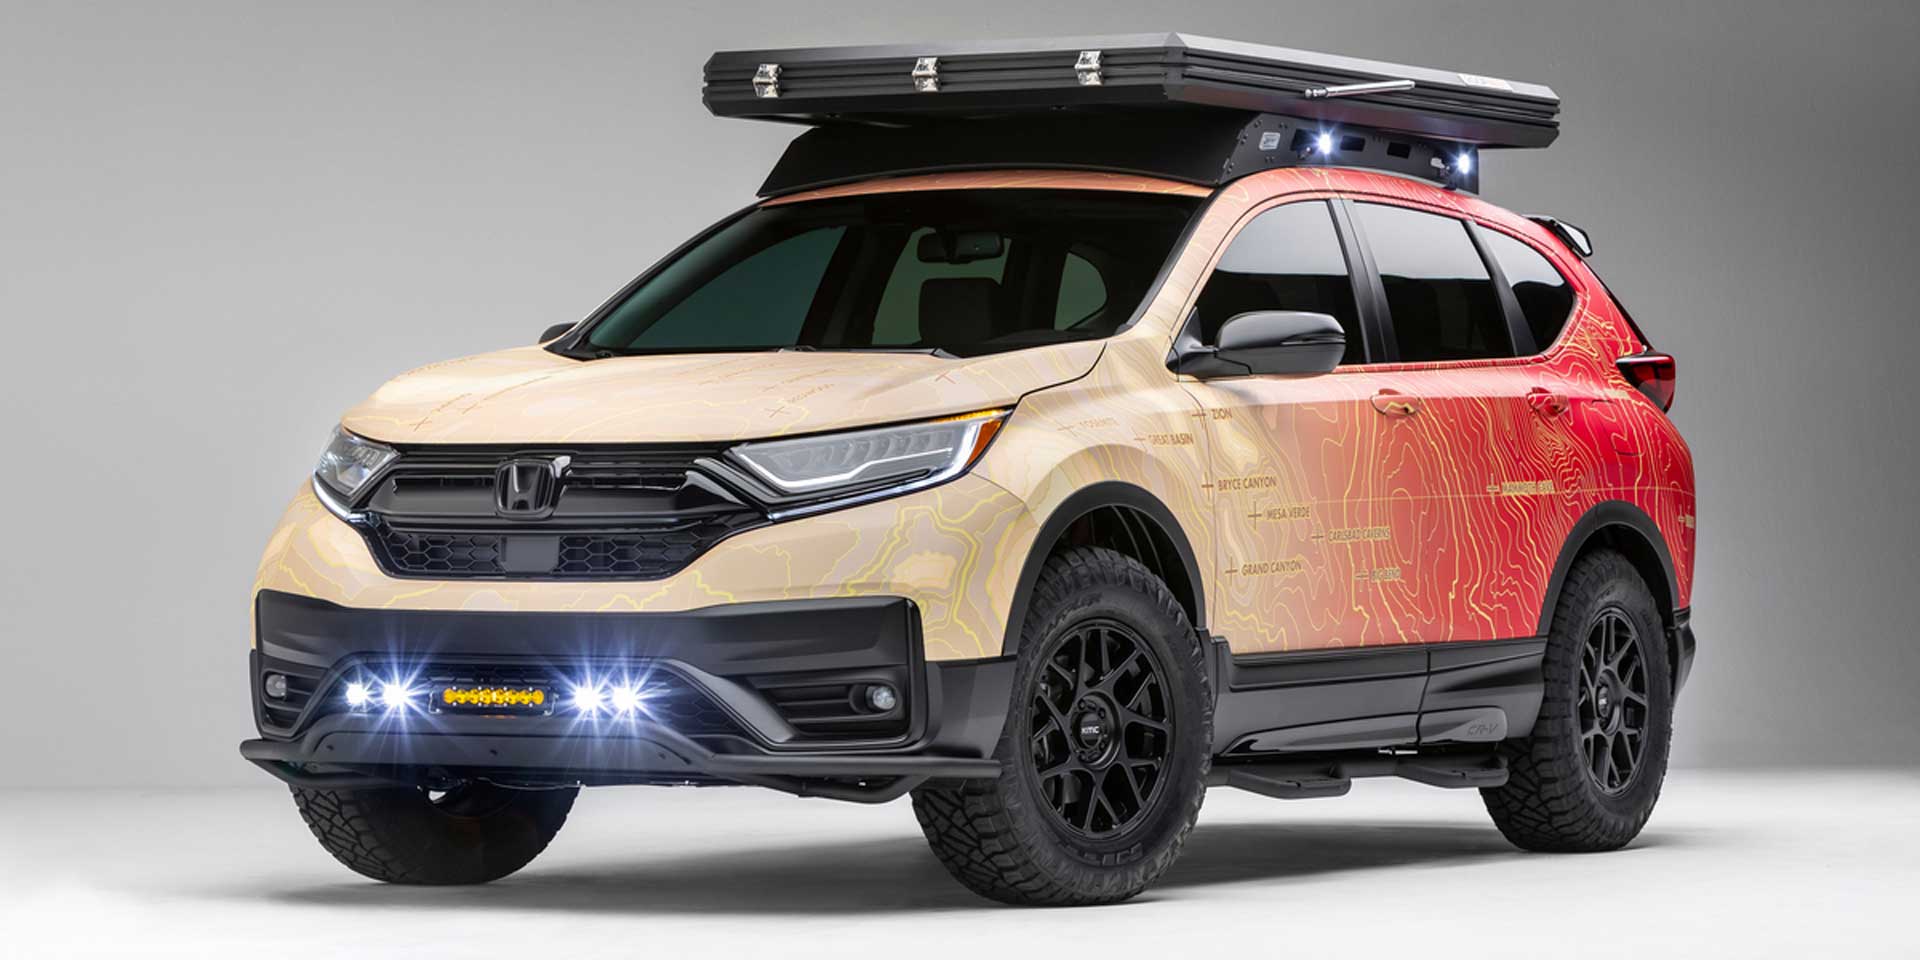 2020 - Honda - CR-V Dream - Vehicles on Display | Chicago ...